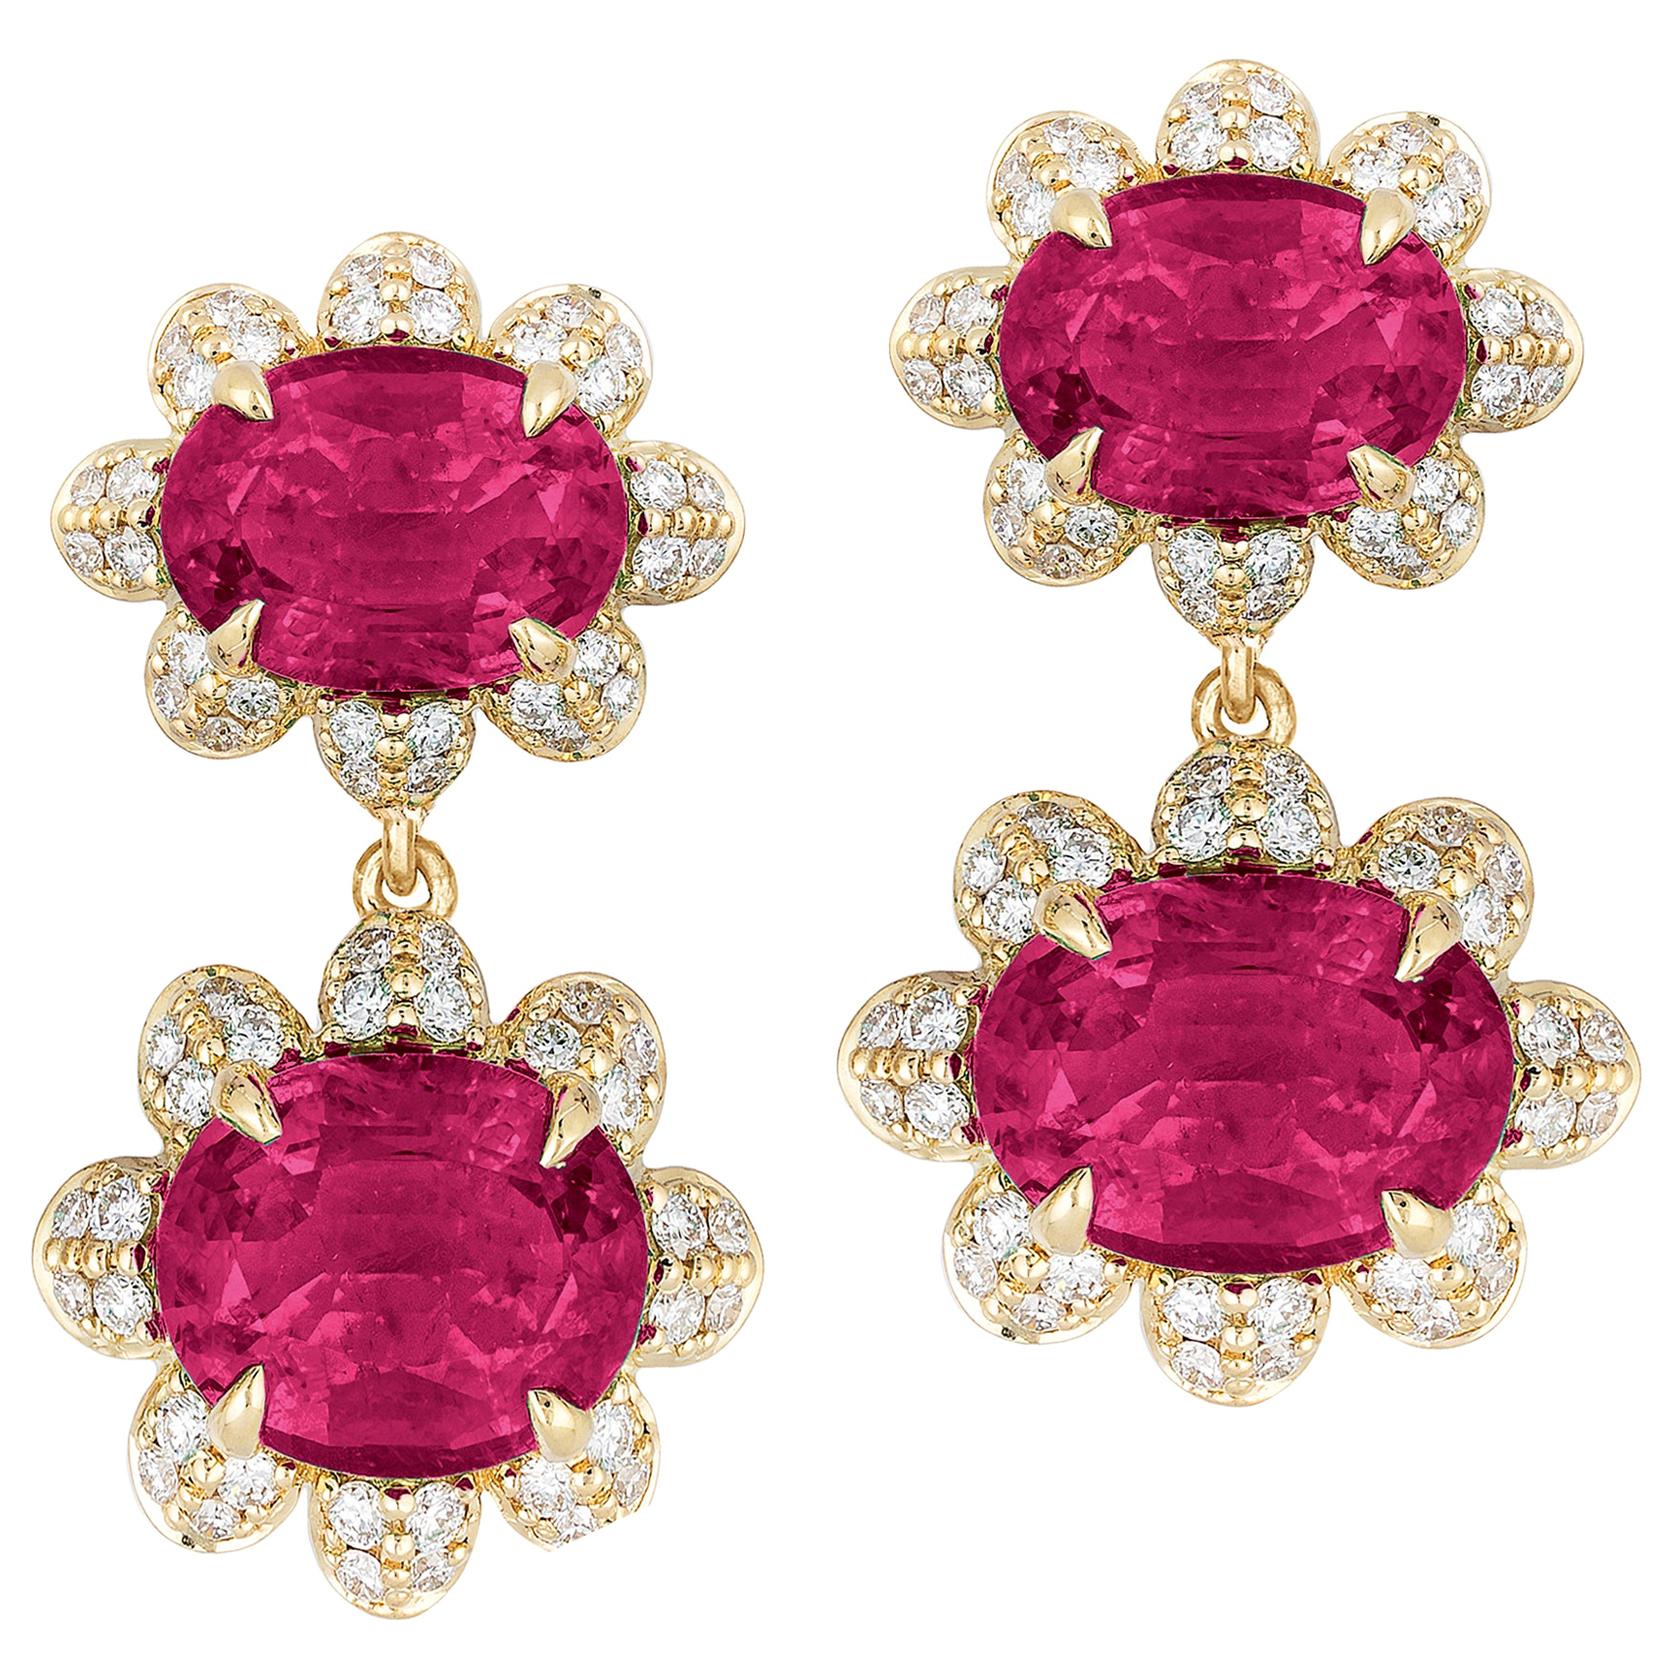 Goshwara Faceted Oval Twin Rubelite with Diamonds Earrings